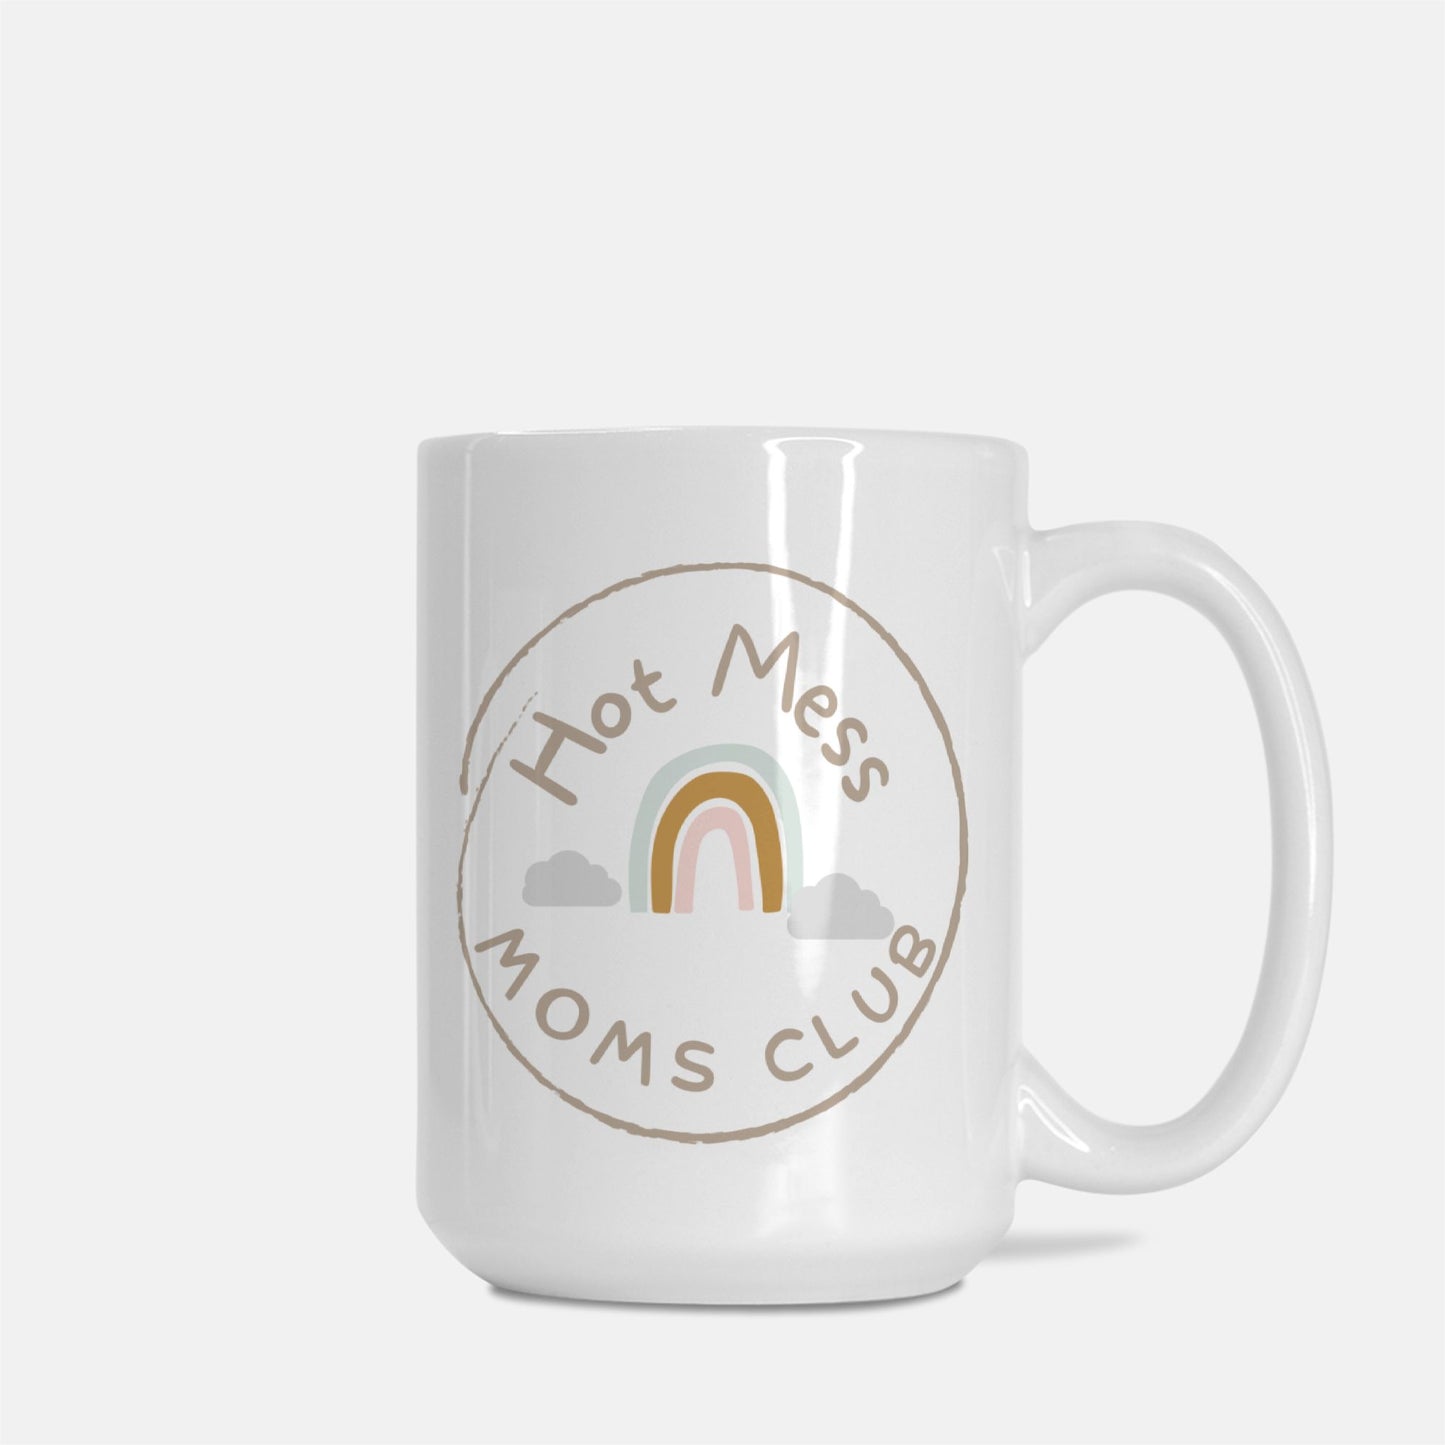 Hot Mess Moms Club Mug Deluxe 15oz.